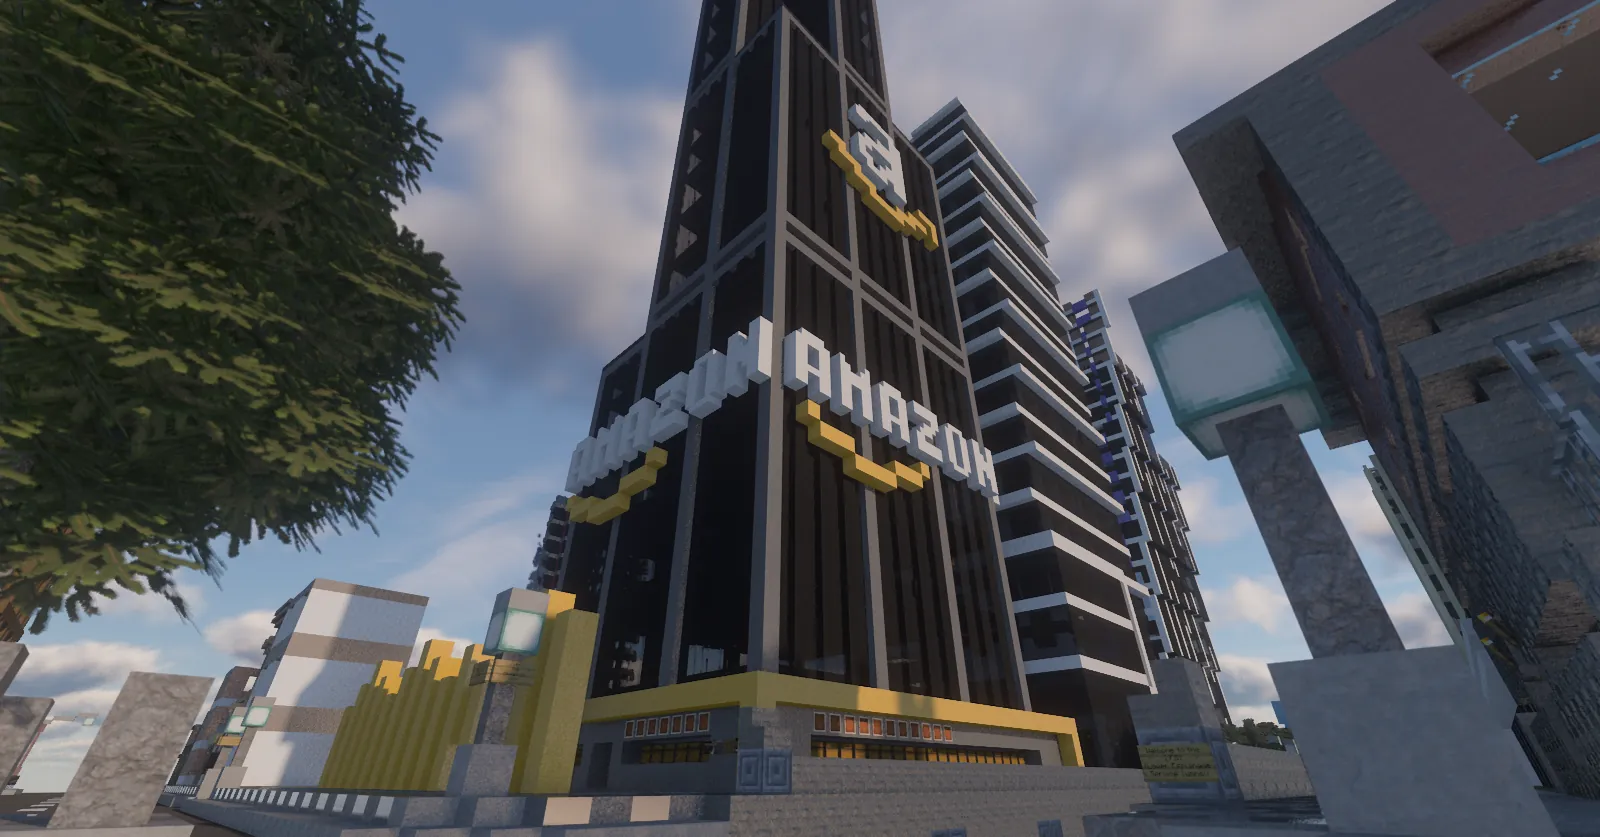 Current Amazon building